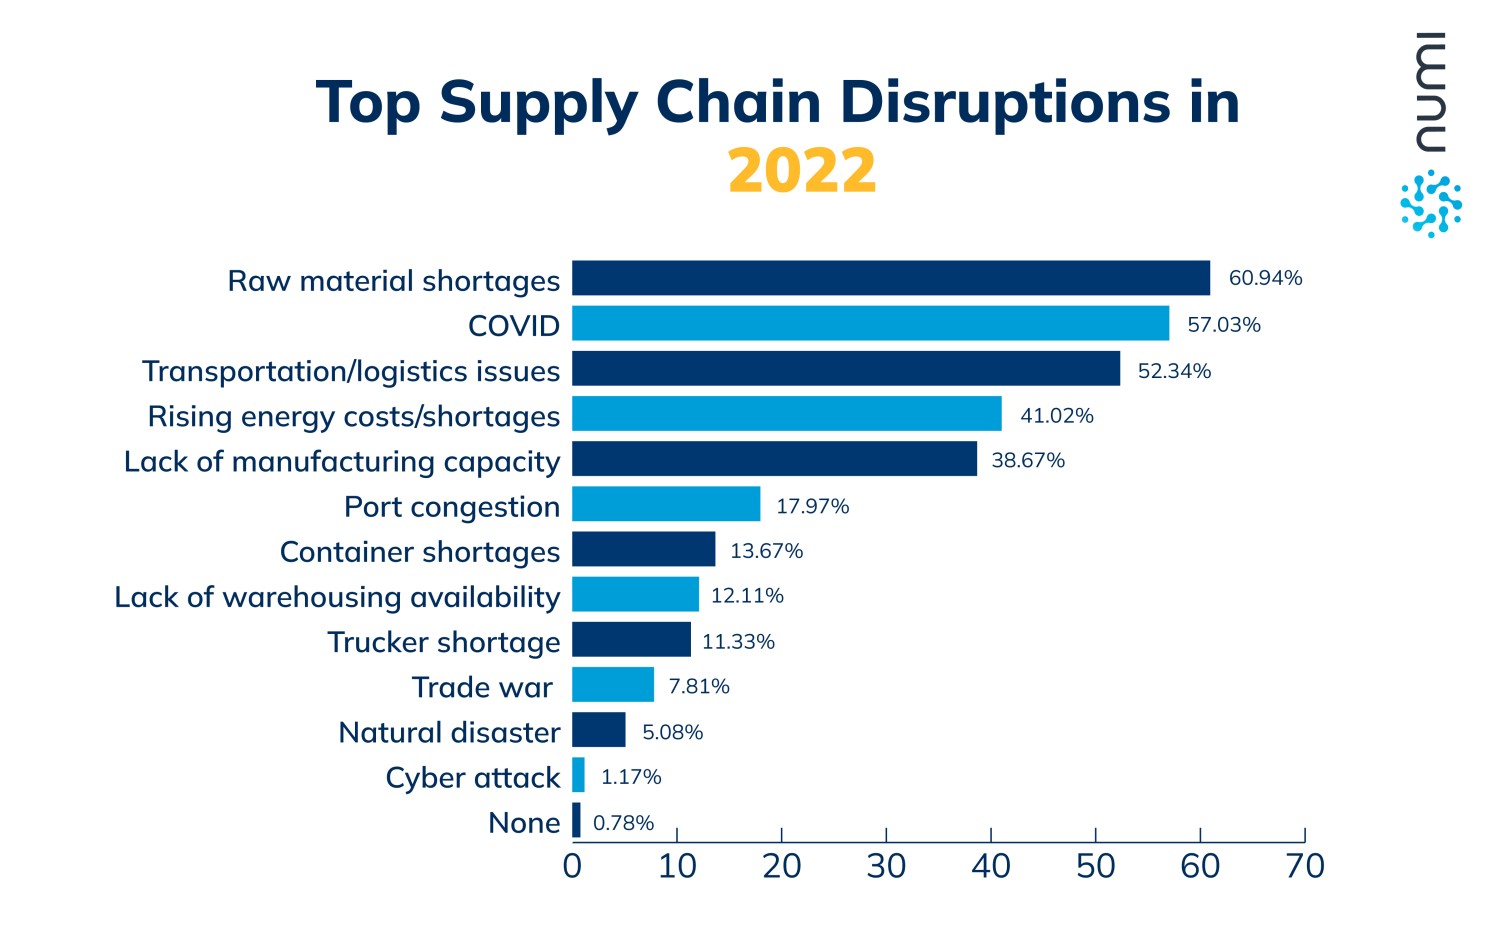 Top Supply Chain Disruptions - Source: Hubs survey, 334 participants, November 2022